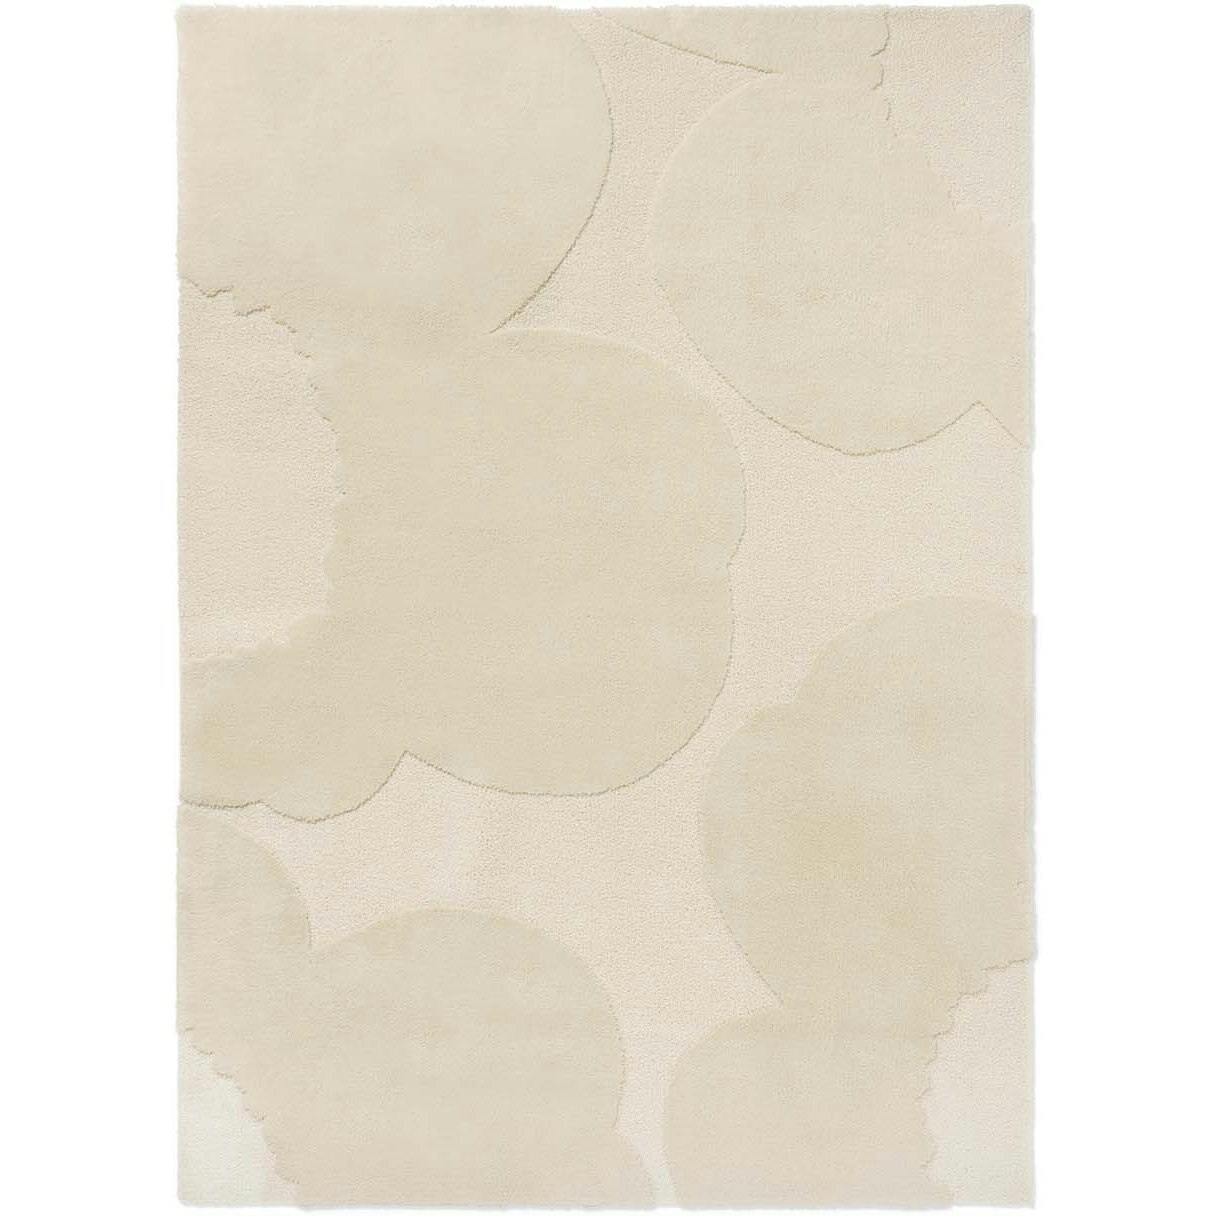 Marimekko Iso Unikko Teppe 200x300 cm, Natural White